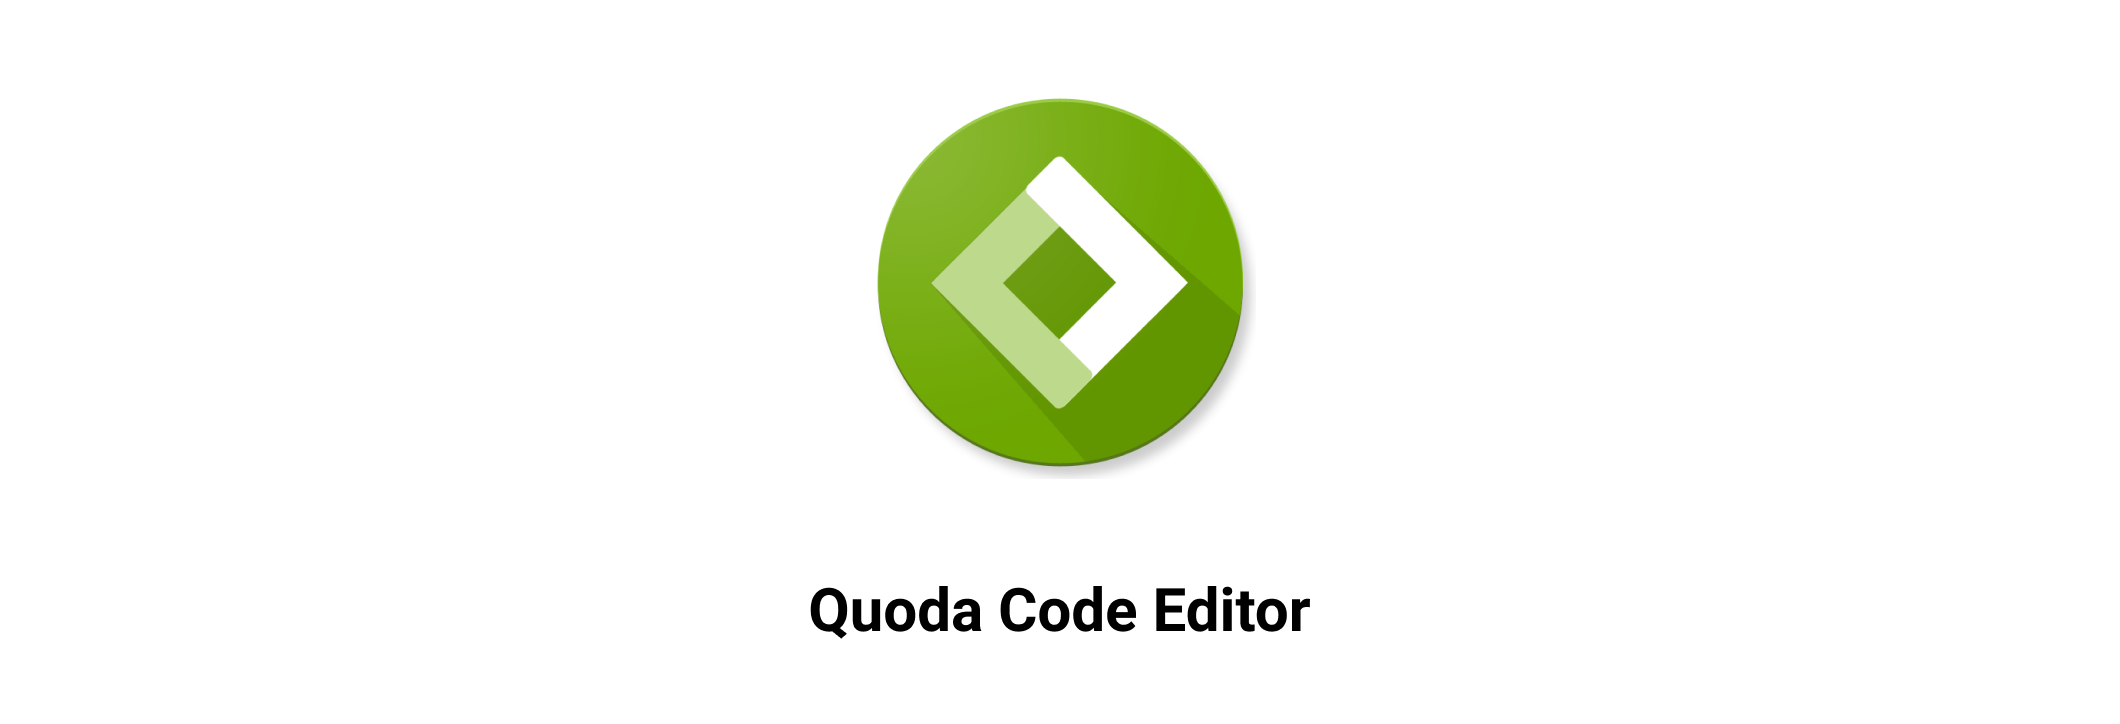 Quoda Code Editor